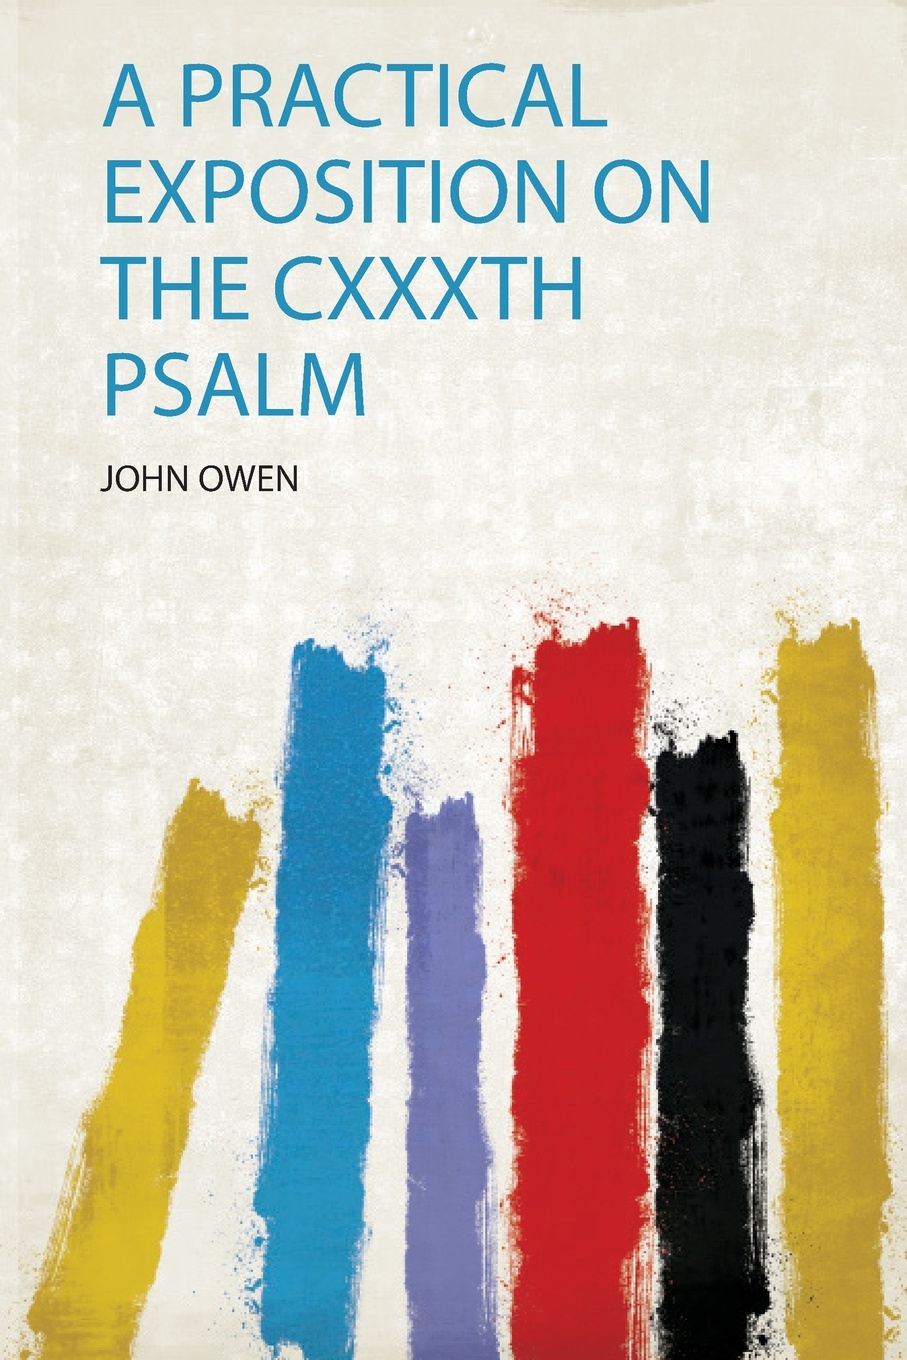 A Practical Exposition on the Cxxxth Psalm